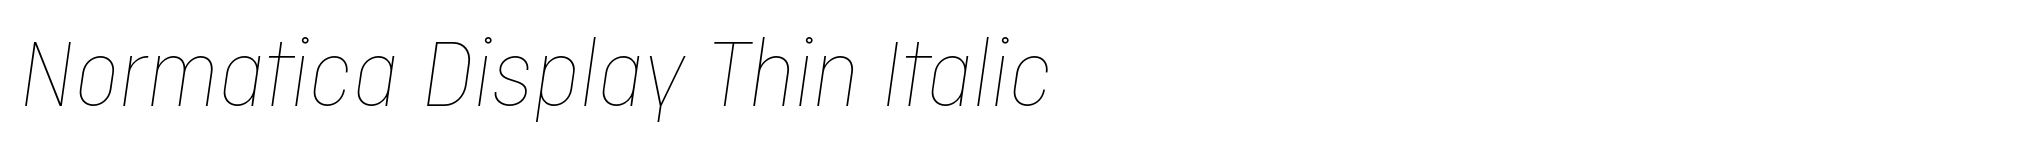 Normatica Display Thin Italic image